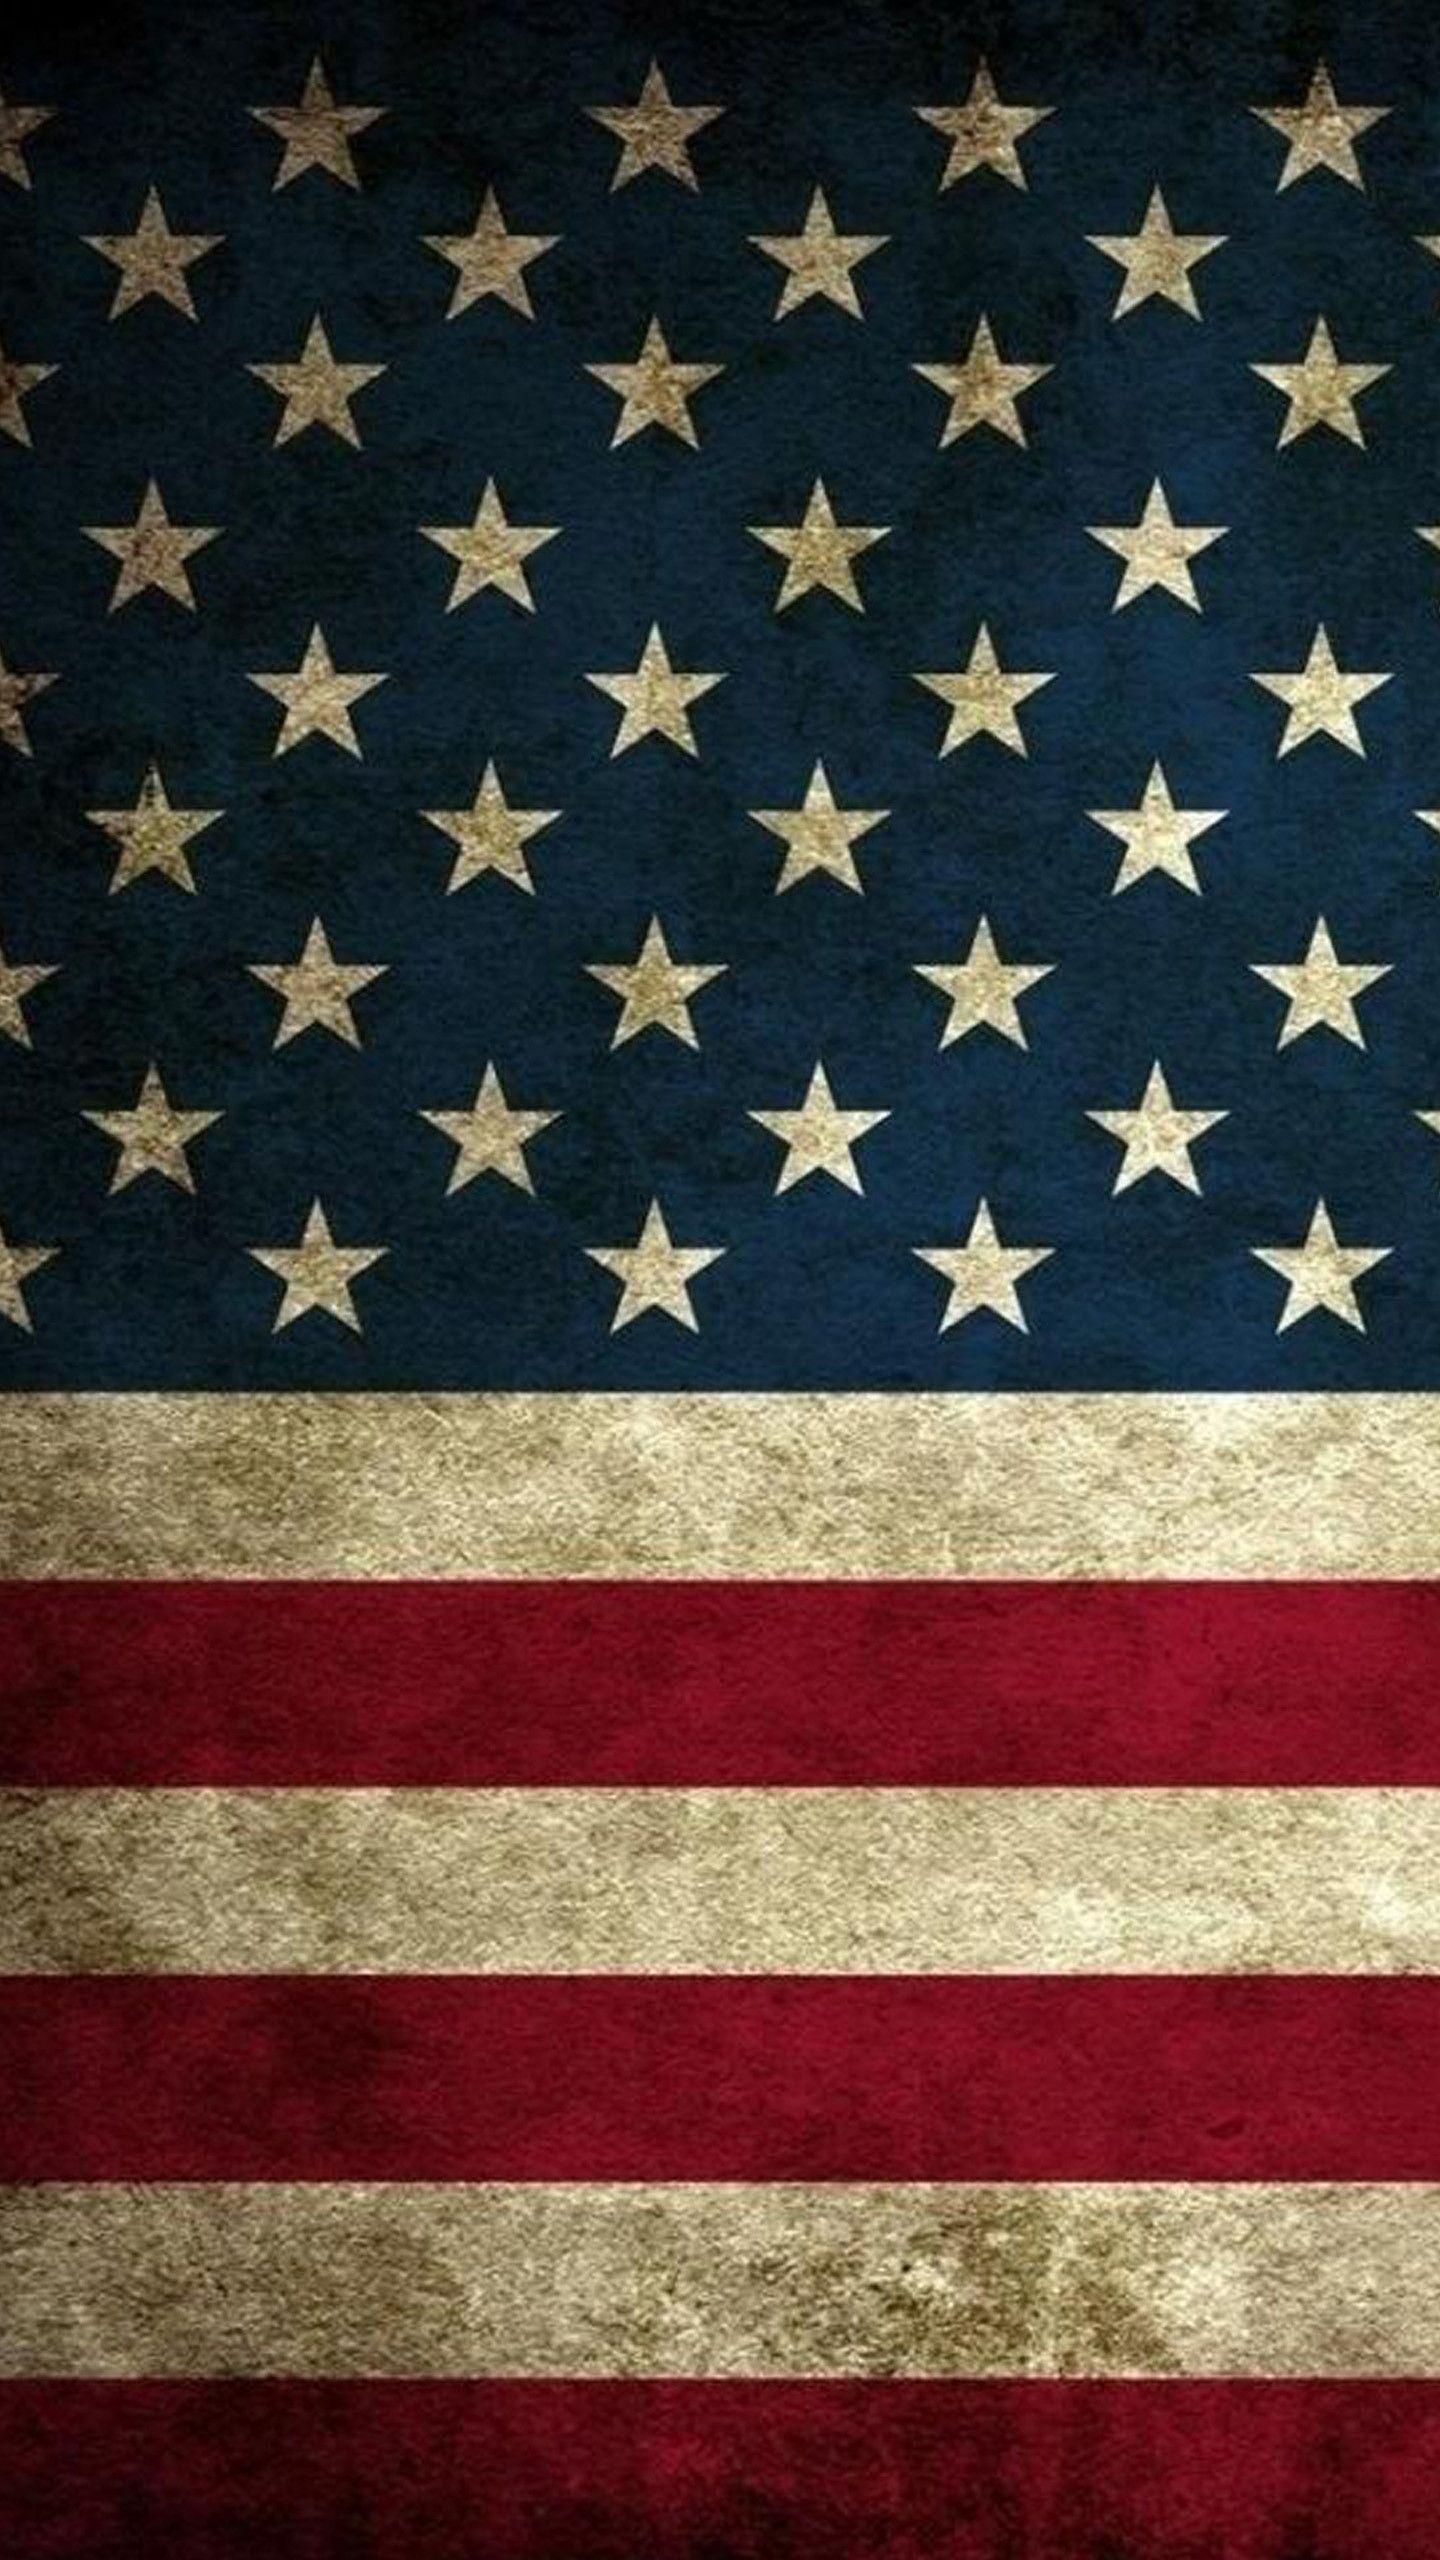 Cool American Flag iPhone Wallpaper